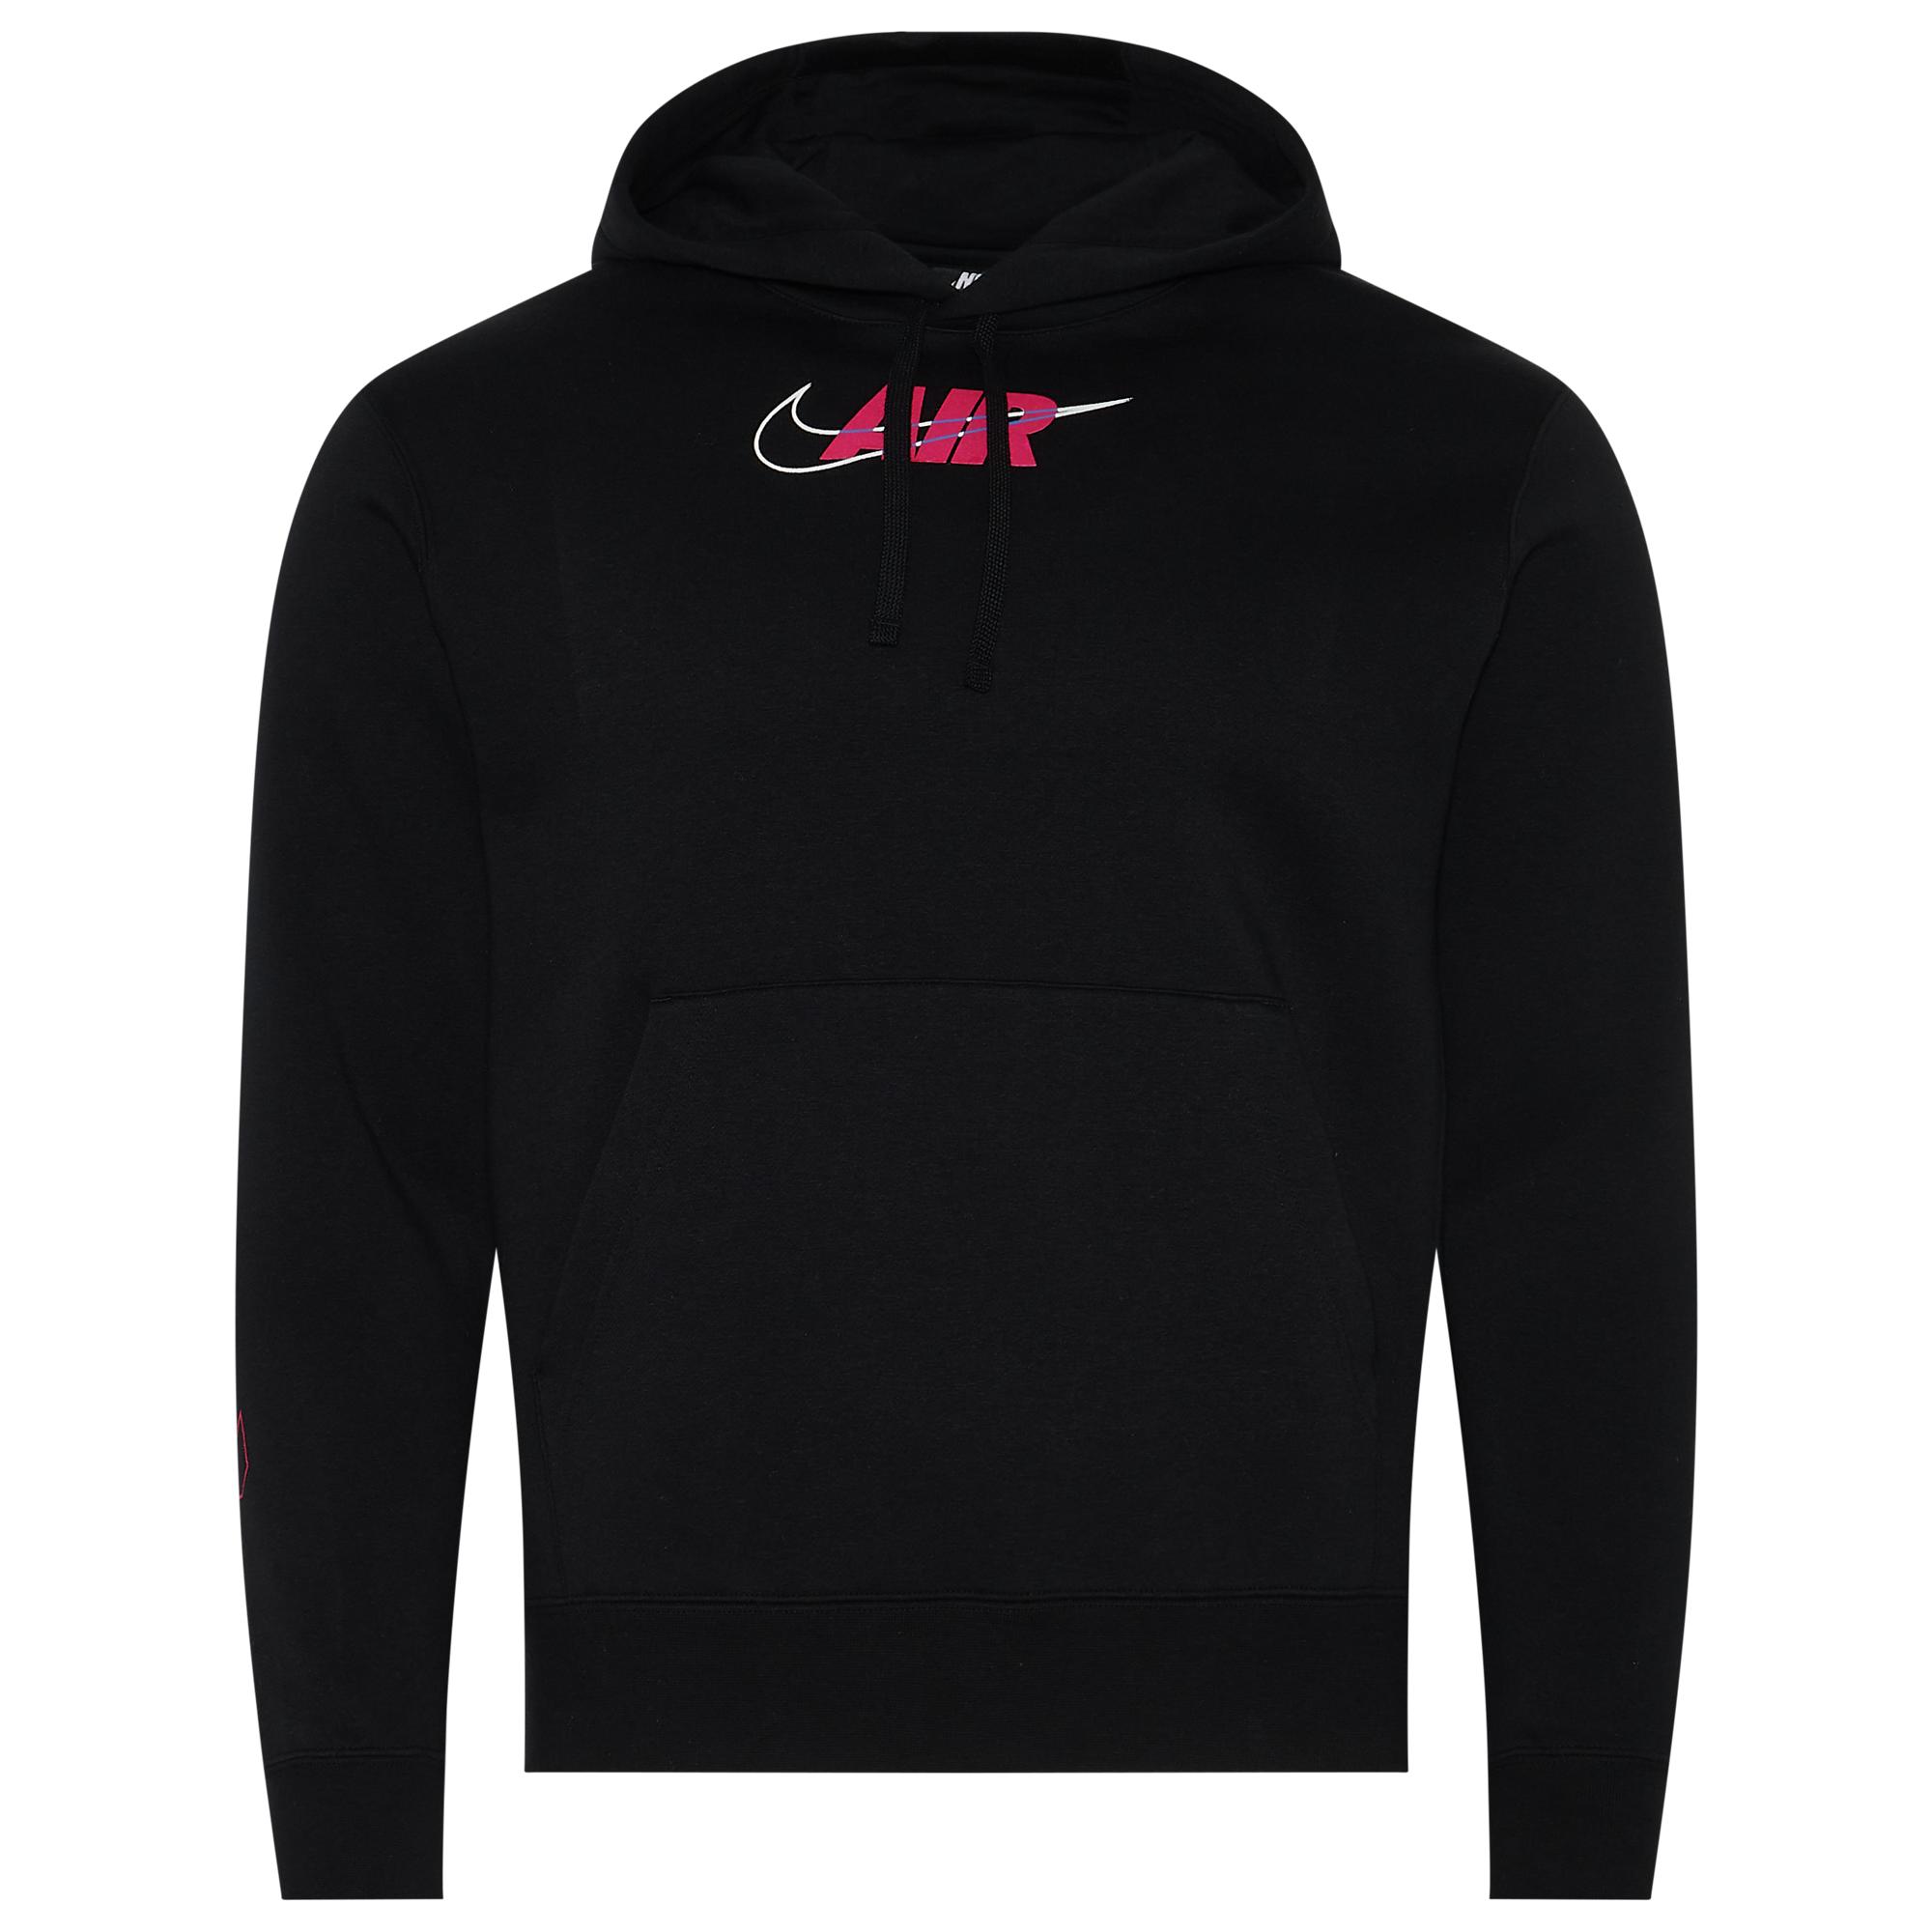 Nike Cotton Air Box Cf Pullover Hoodie in Black/Pink (Black) for Men | Lyst